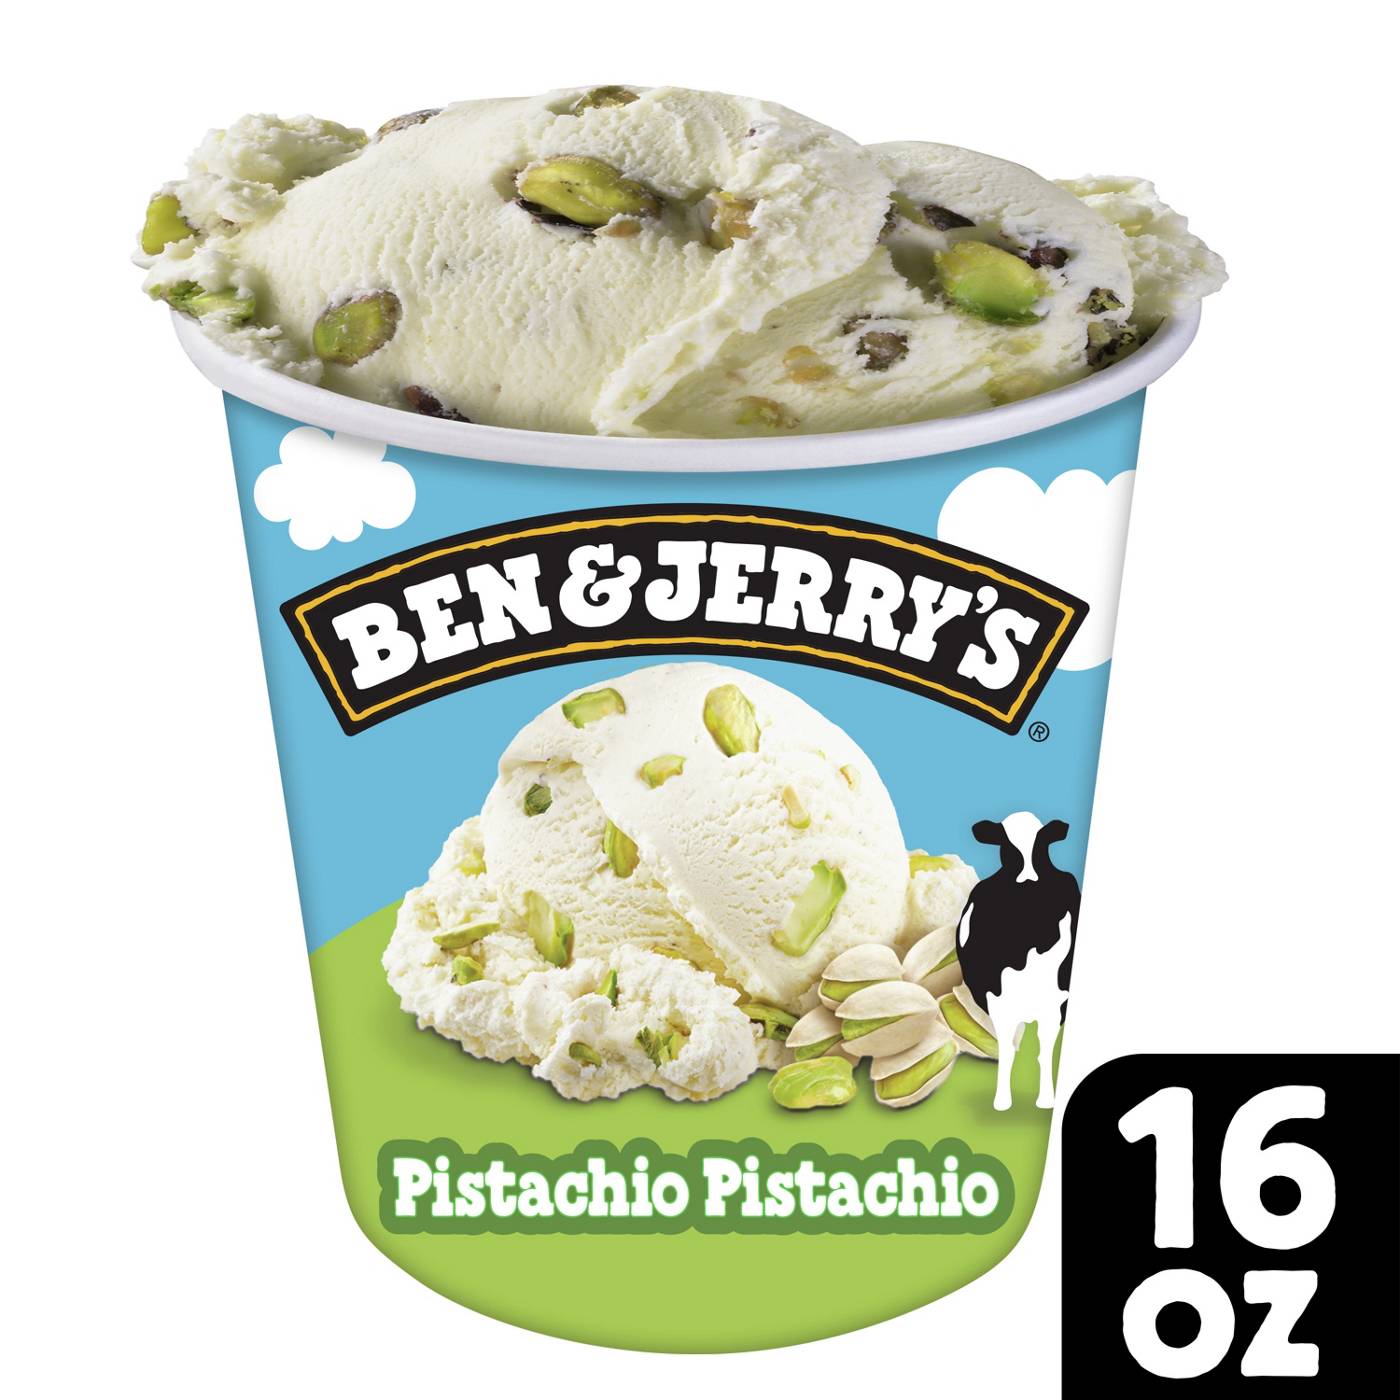 Ben & Jerry's Pistachio Pistachio Ice Cream; image 5 of 6